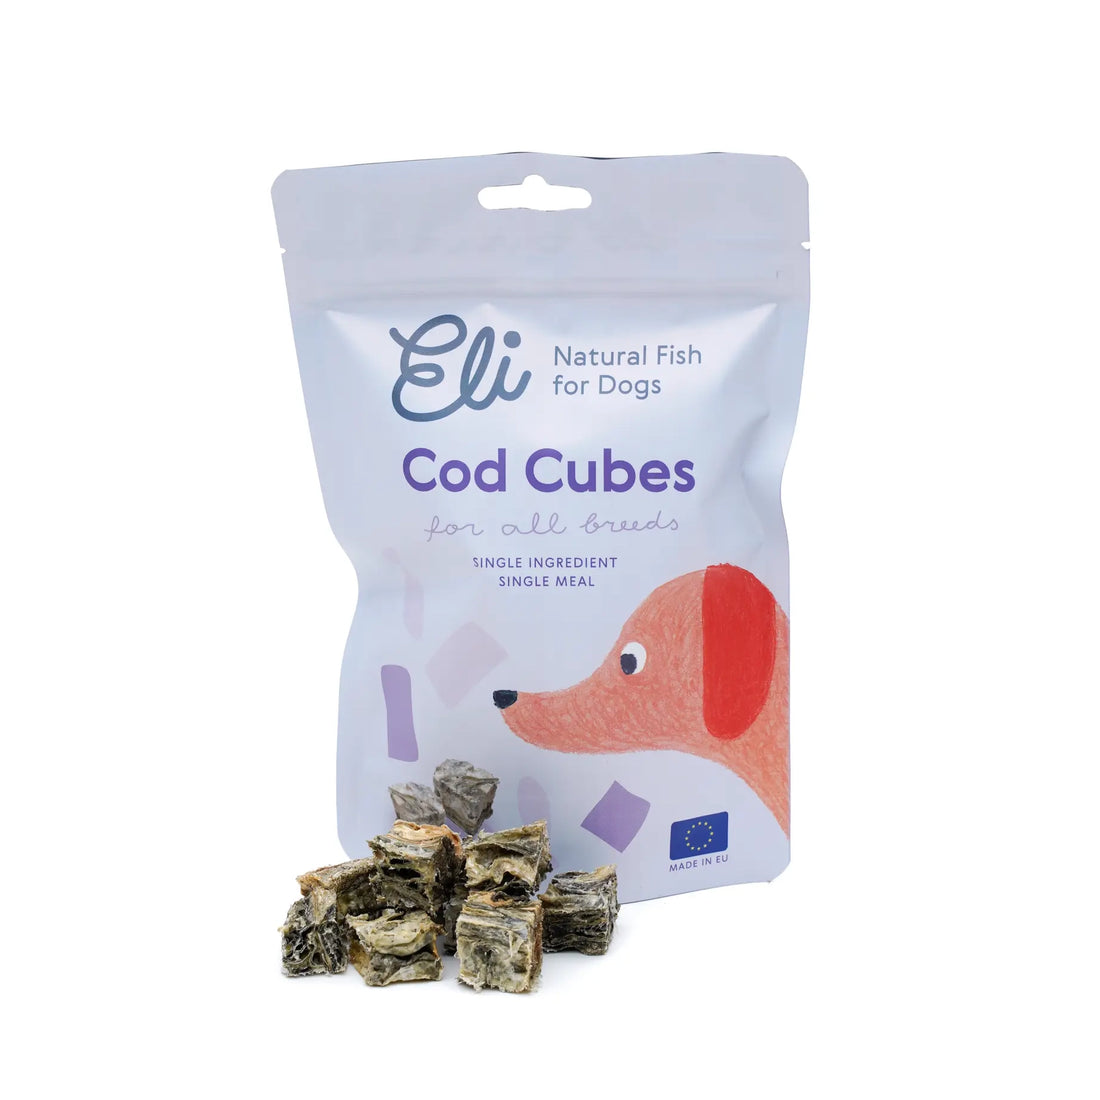 Cod Cubes Dog Treats